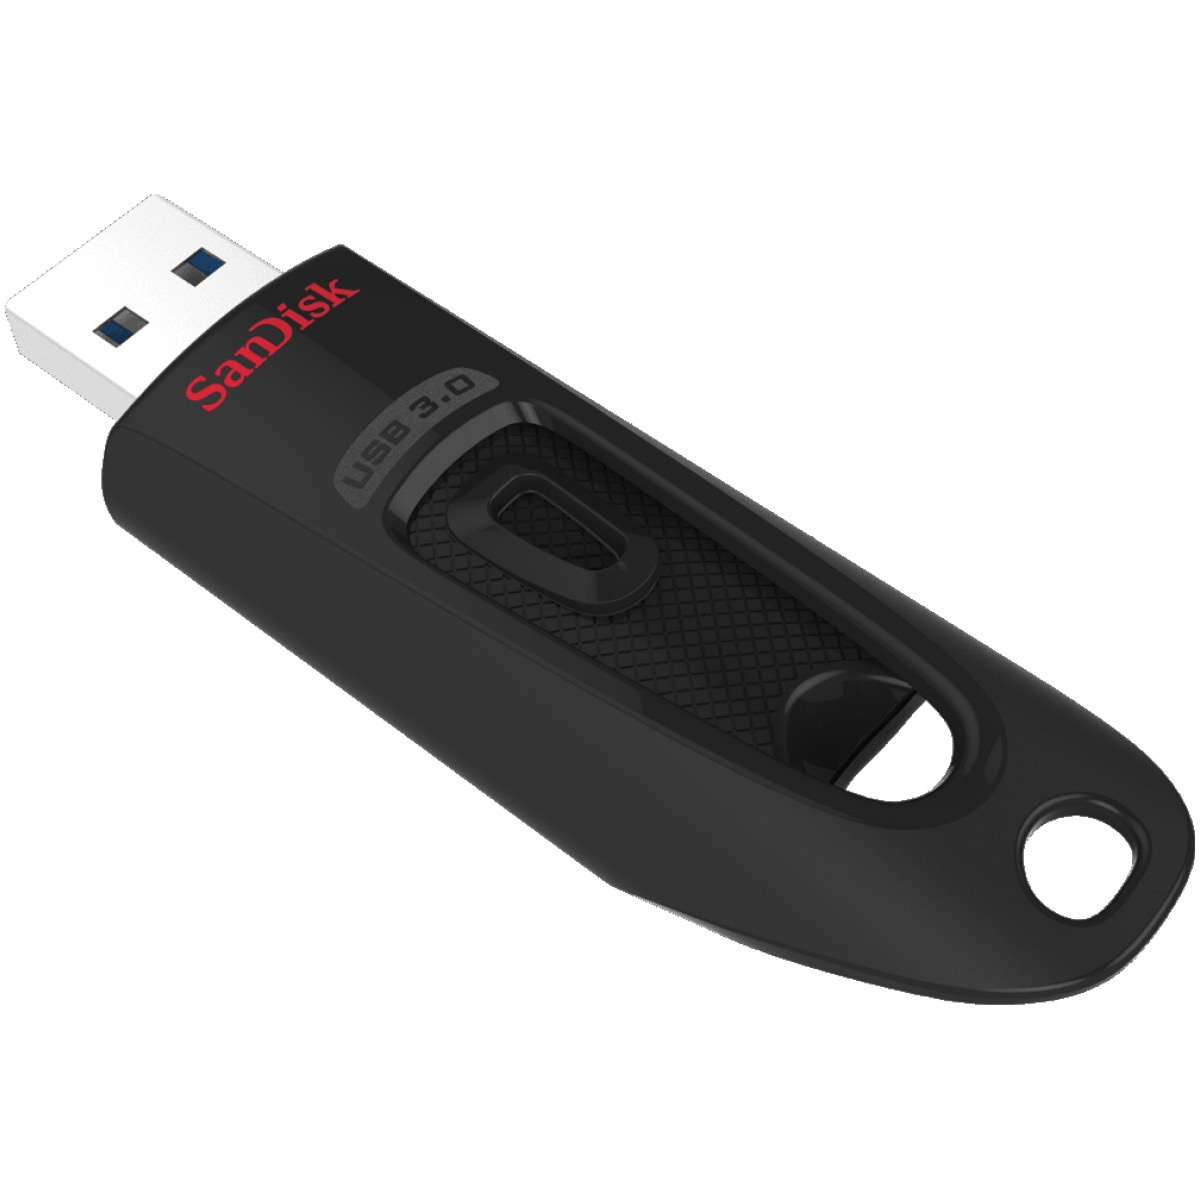 SanDisk 16 GB Ultra USB 3.0 Cruzer